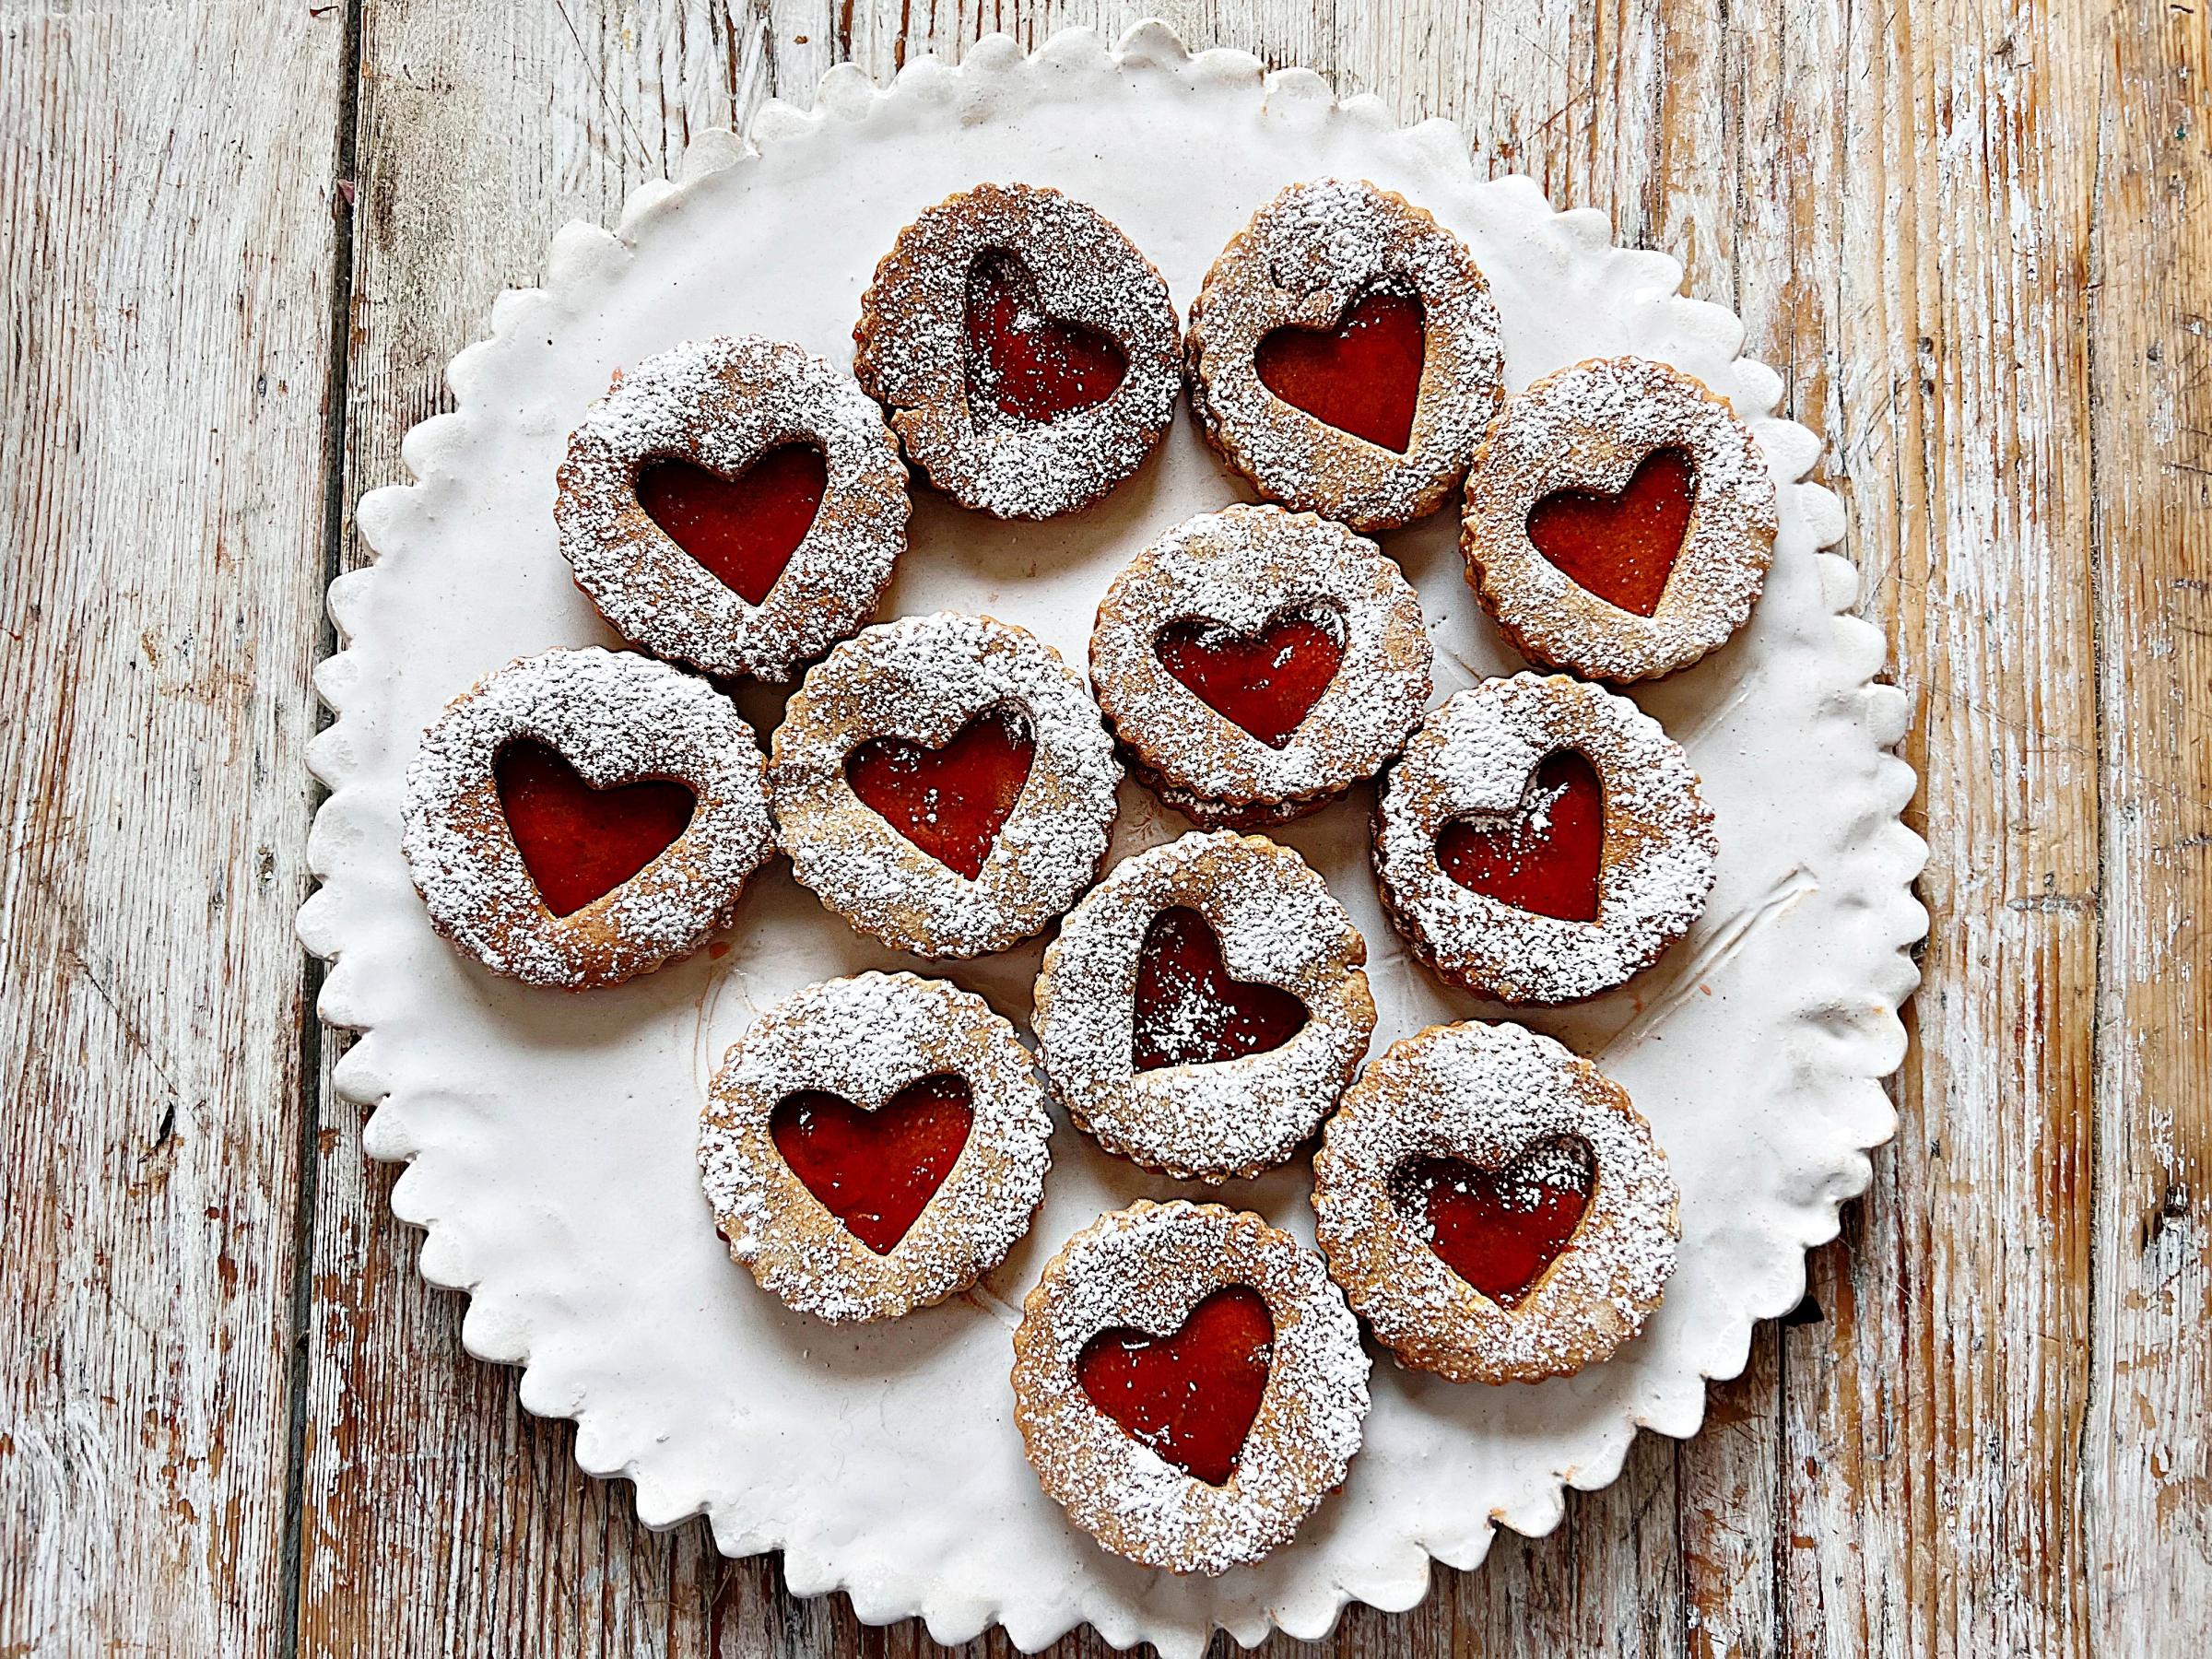 Austrian festive treats: Linzer biscuits and Sacher Torte